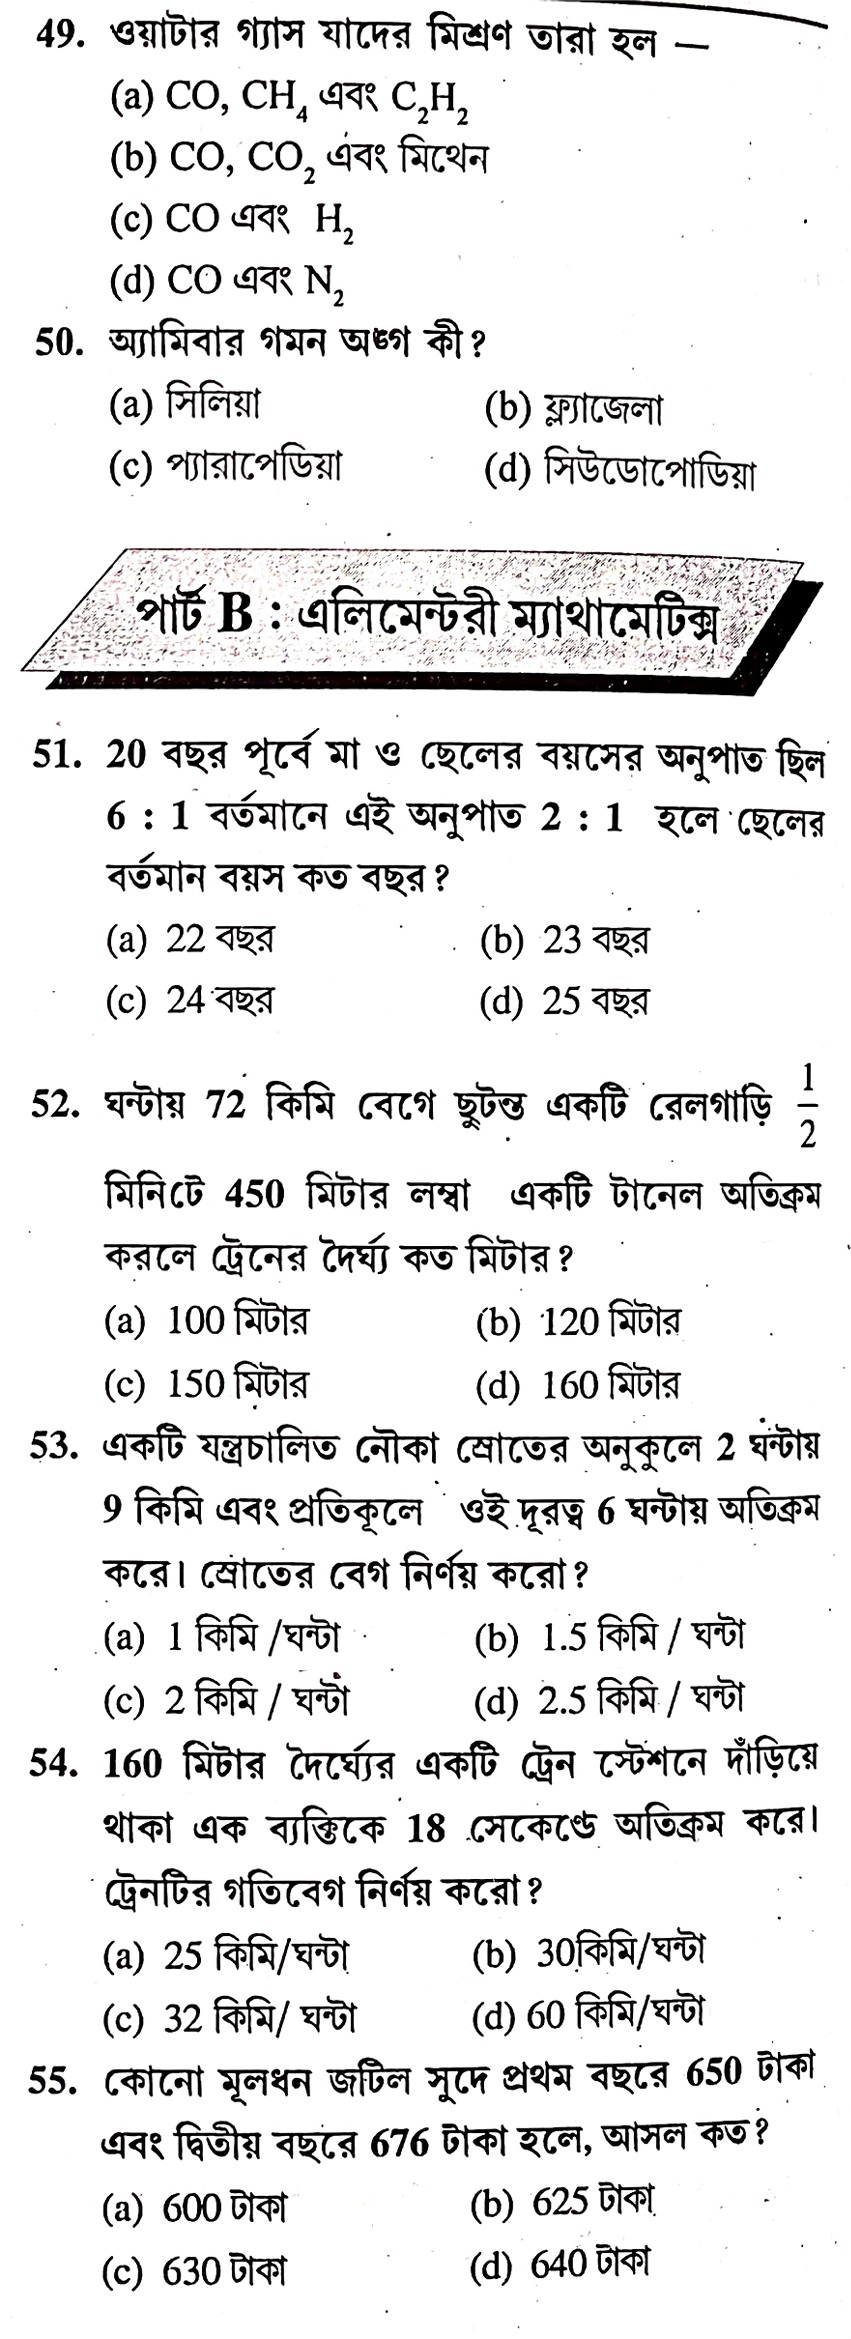 West Bengal Police Constable Preliminary Practice Set - 19 In Bengali || পশ্চিমবঙ্গ পুলিশ কনস্টেবল প্রিলিমিনারী প্র্যাকটিস সেট -১৯ - WBCS Notebook